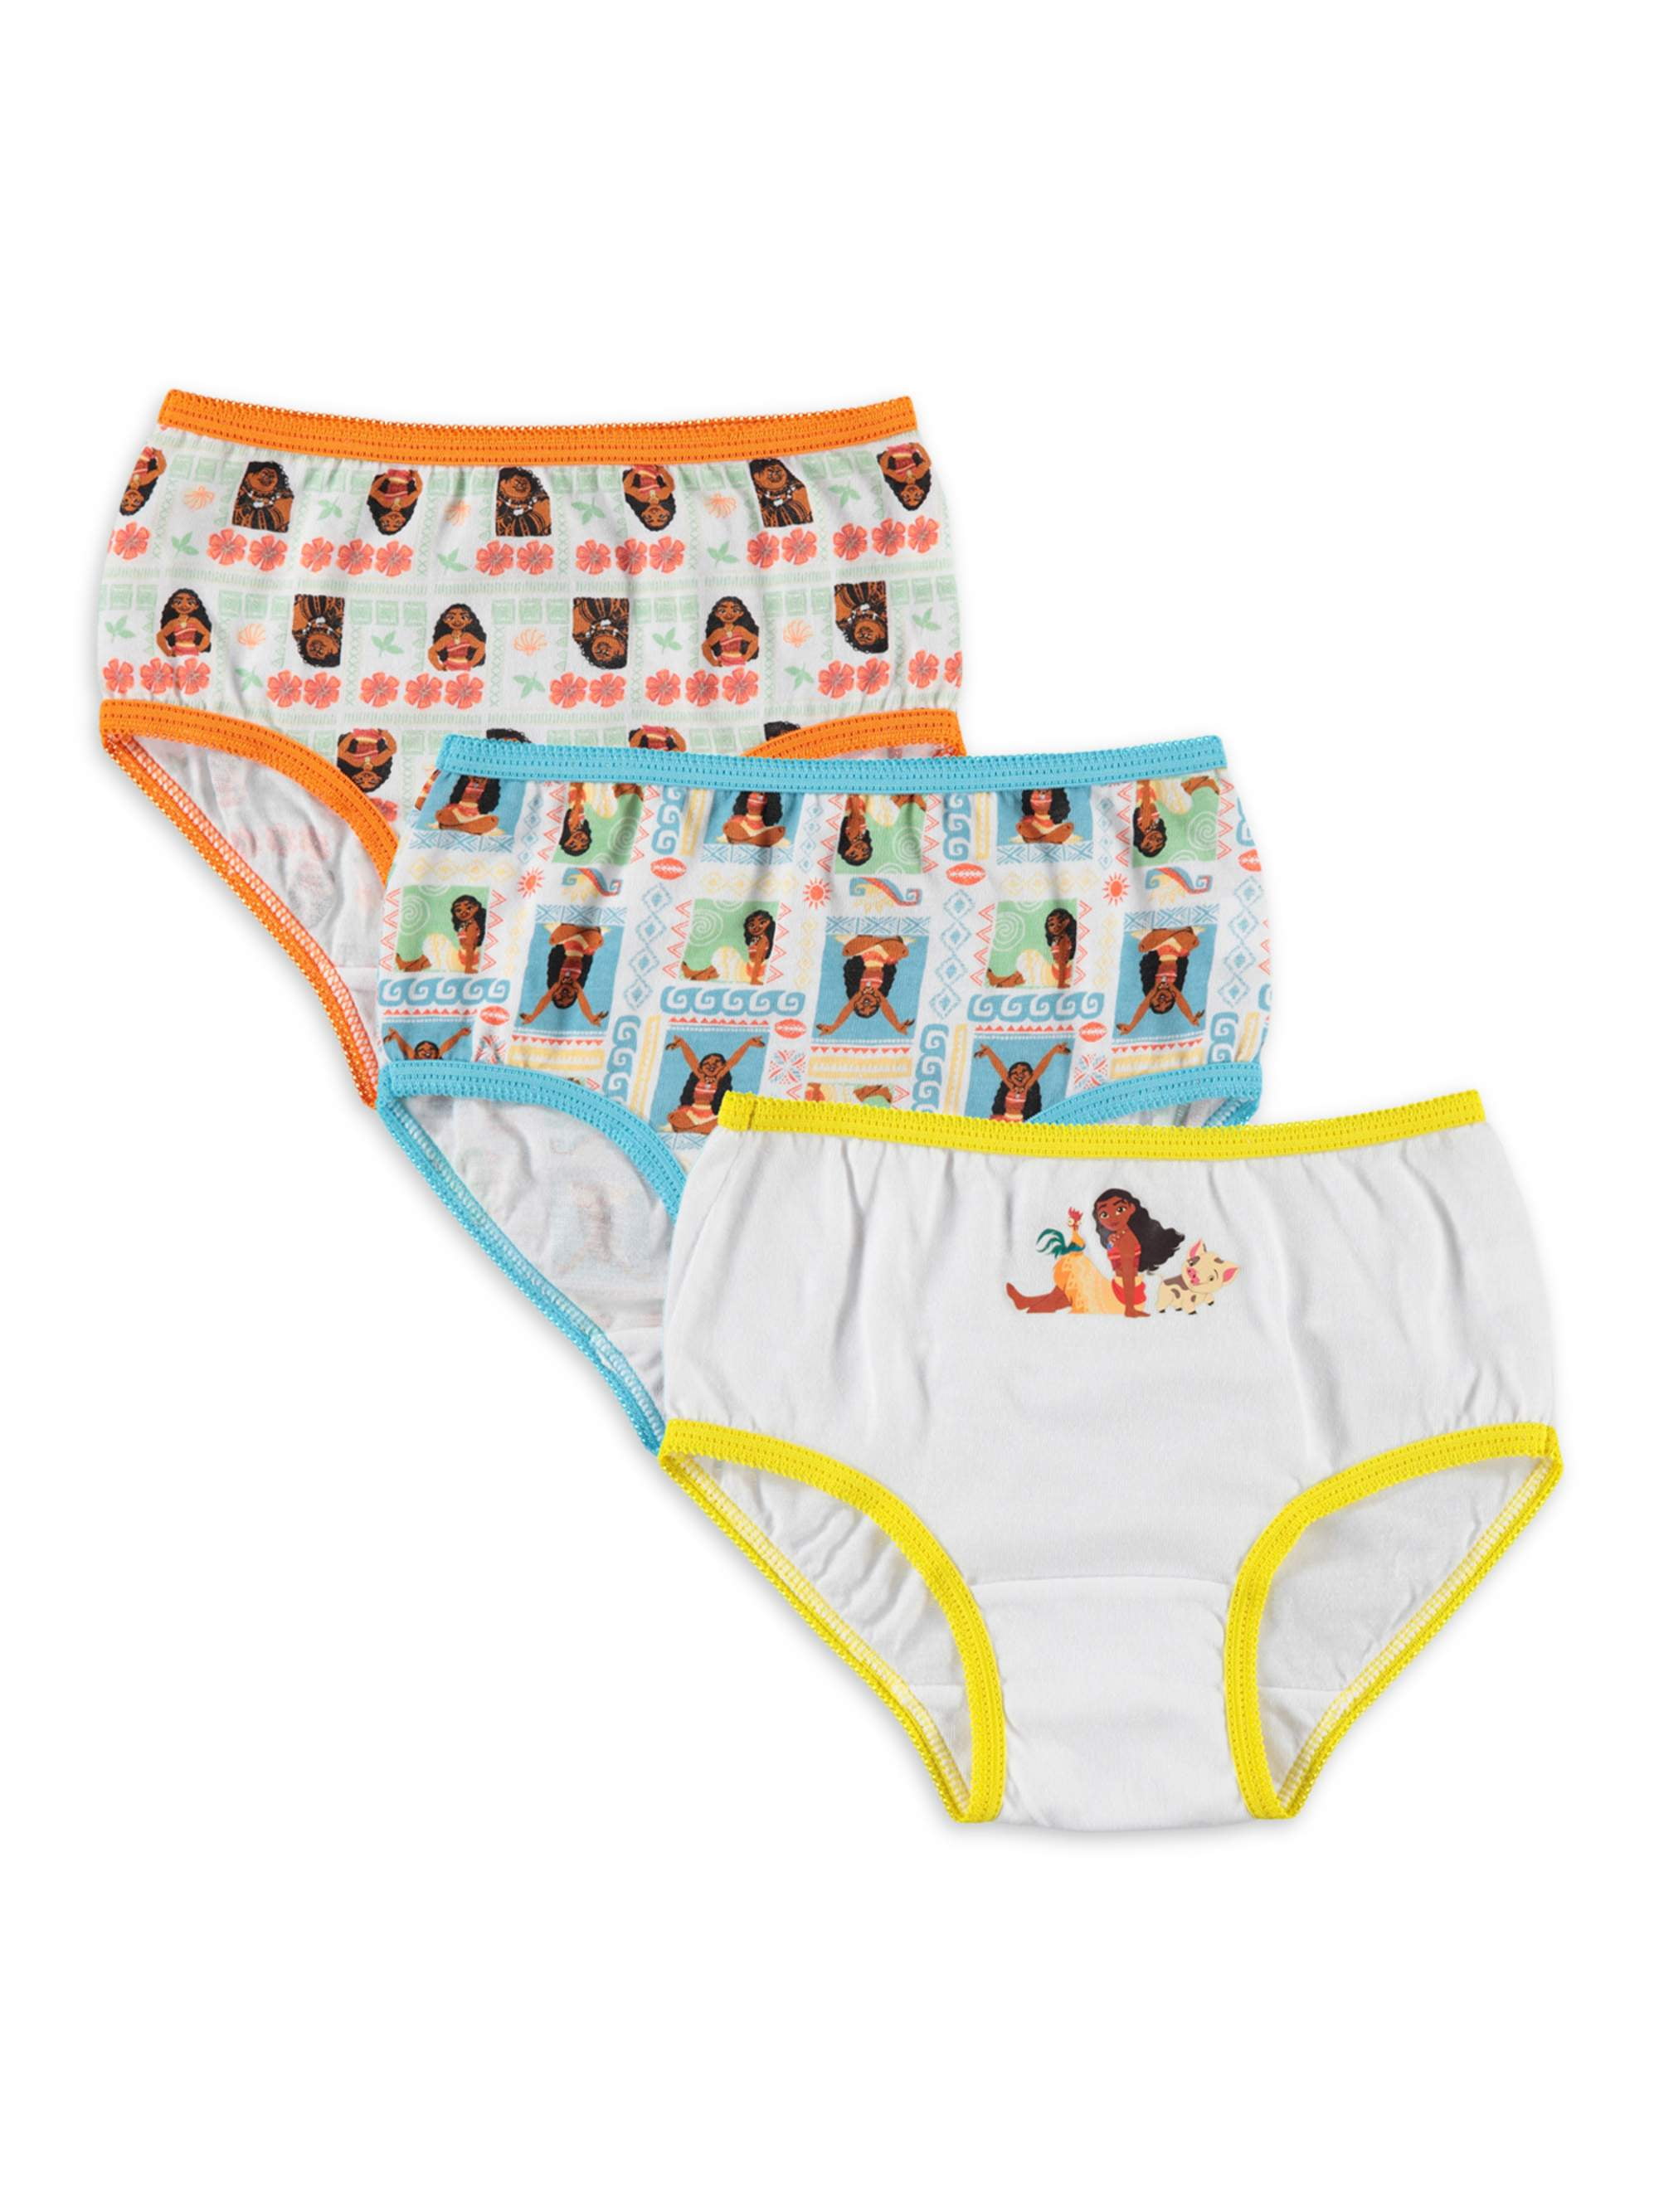 Disney Princess Brave Merida Girl 10 PC Underwear Panties Size 6